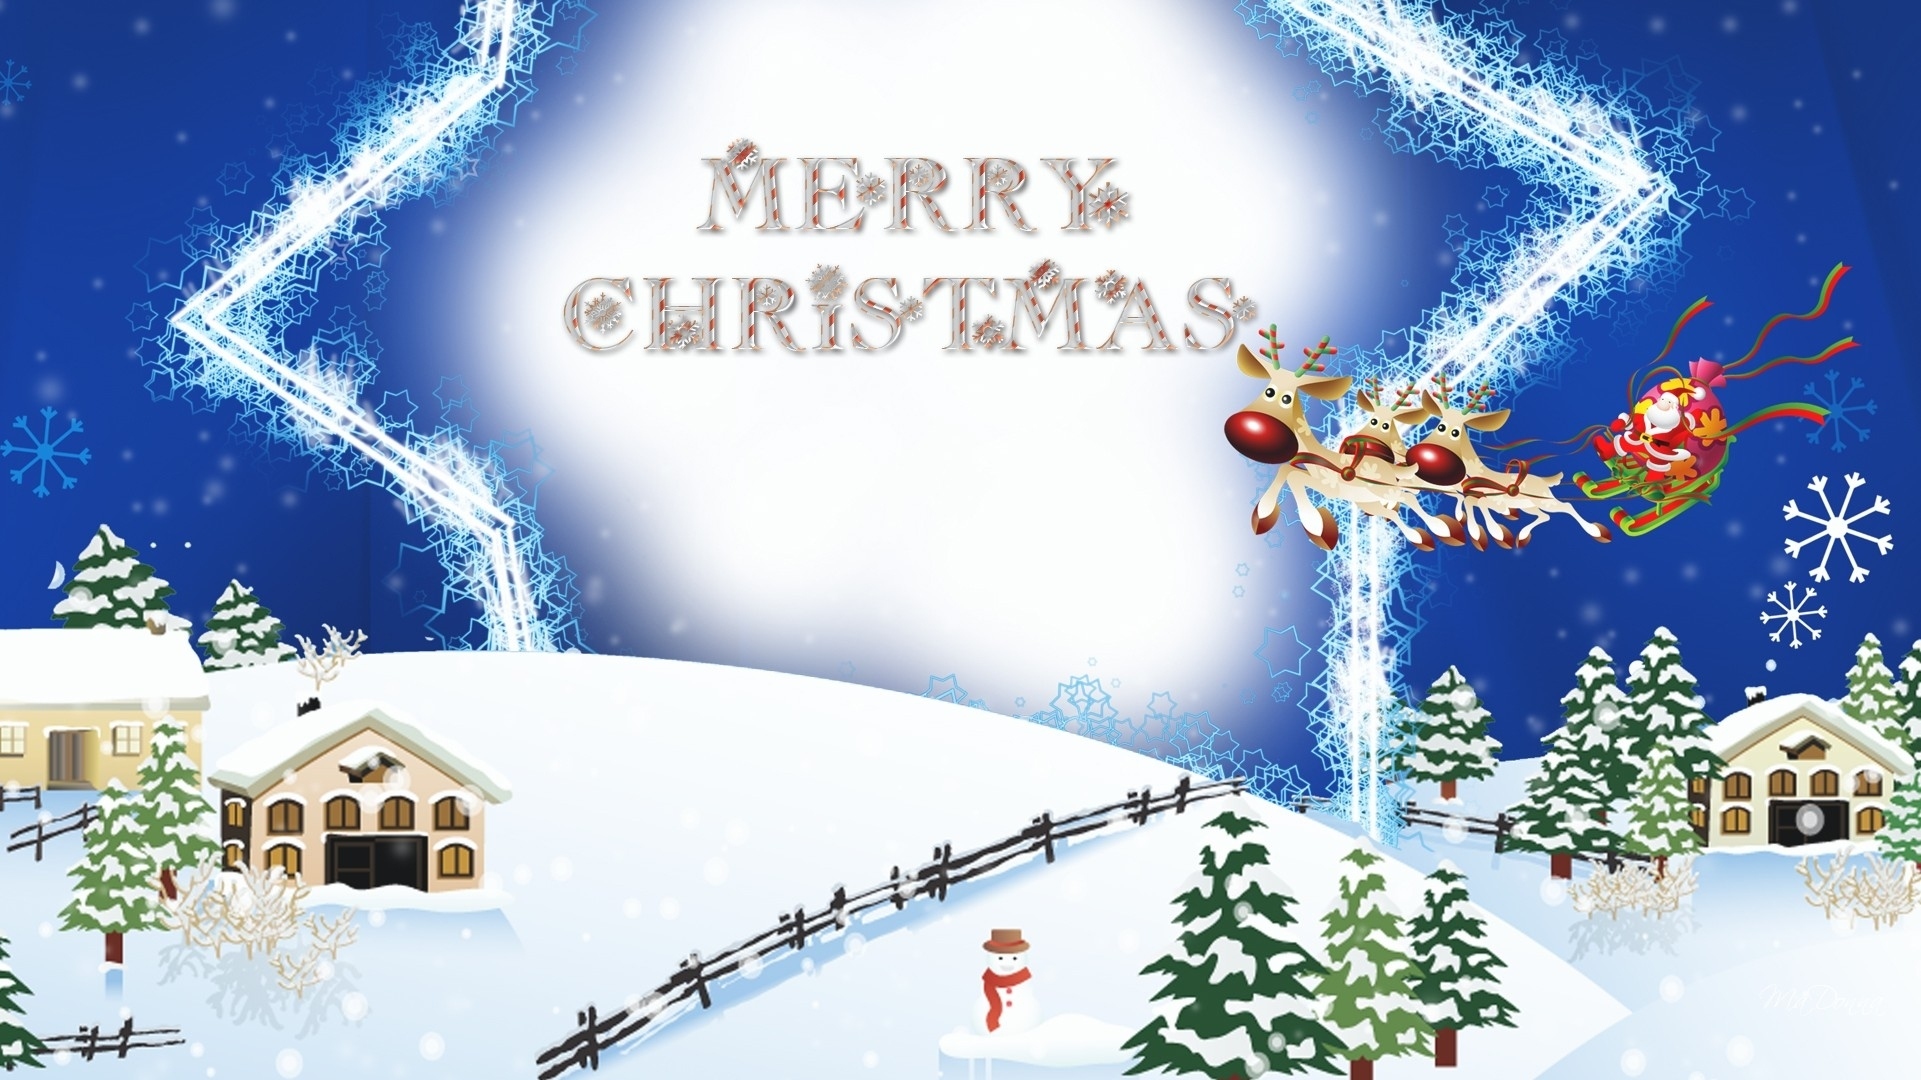 PC Wallpapers holiday, christmas, house, merry christmas, reindeer, santa claus, sleigh, snow, snowman